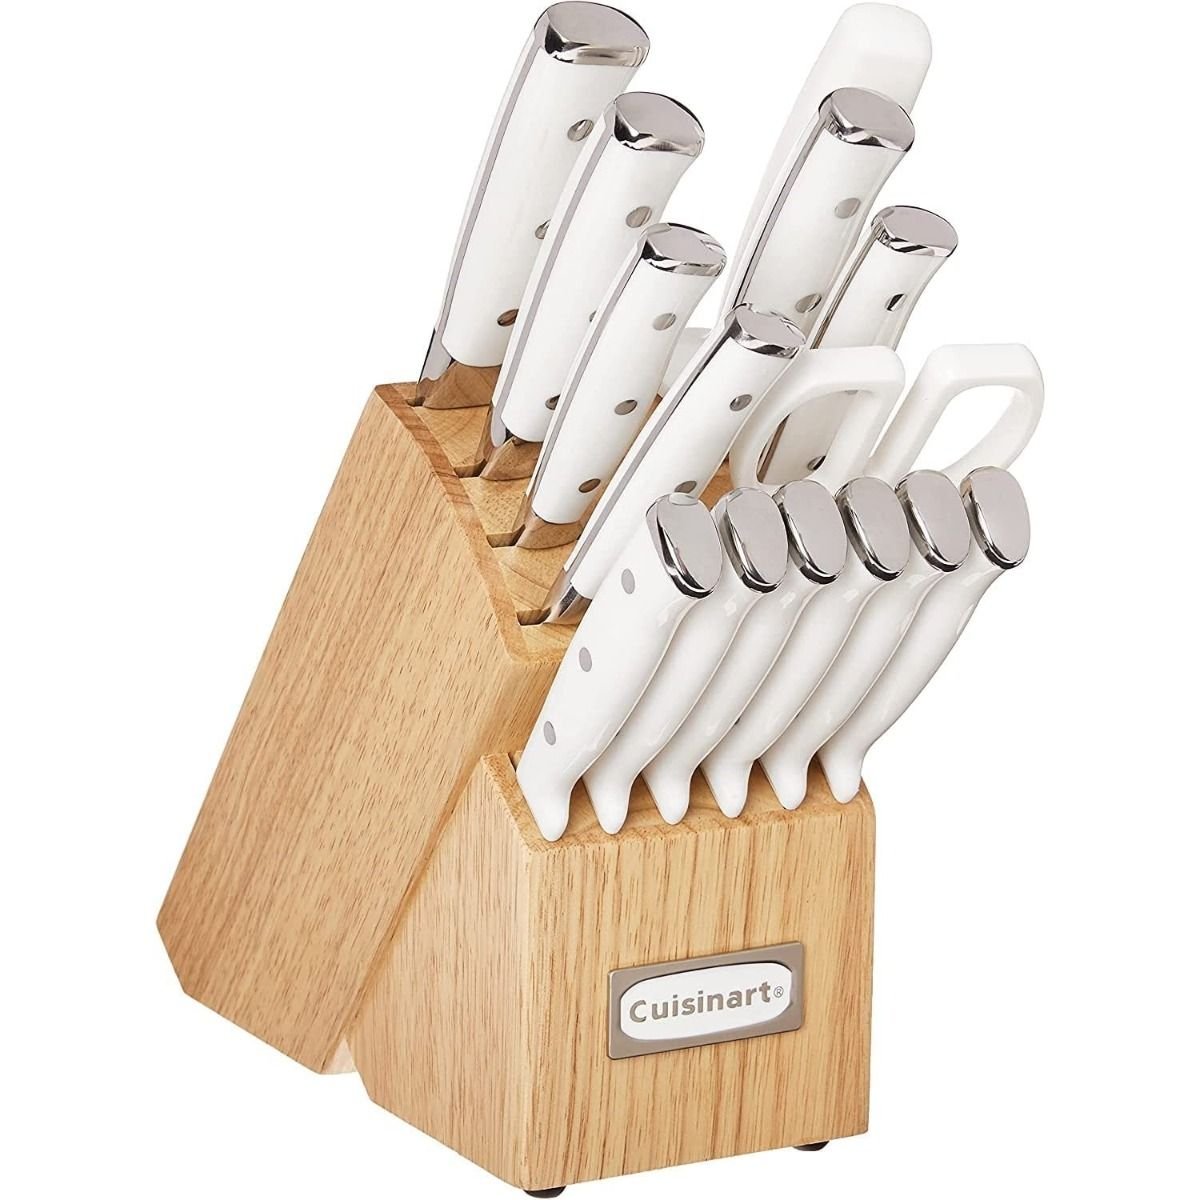 KitchenAid 3 Piece Classic Forged Triple Rivet Starter Cutlery Set